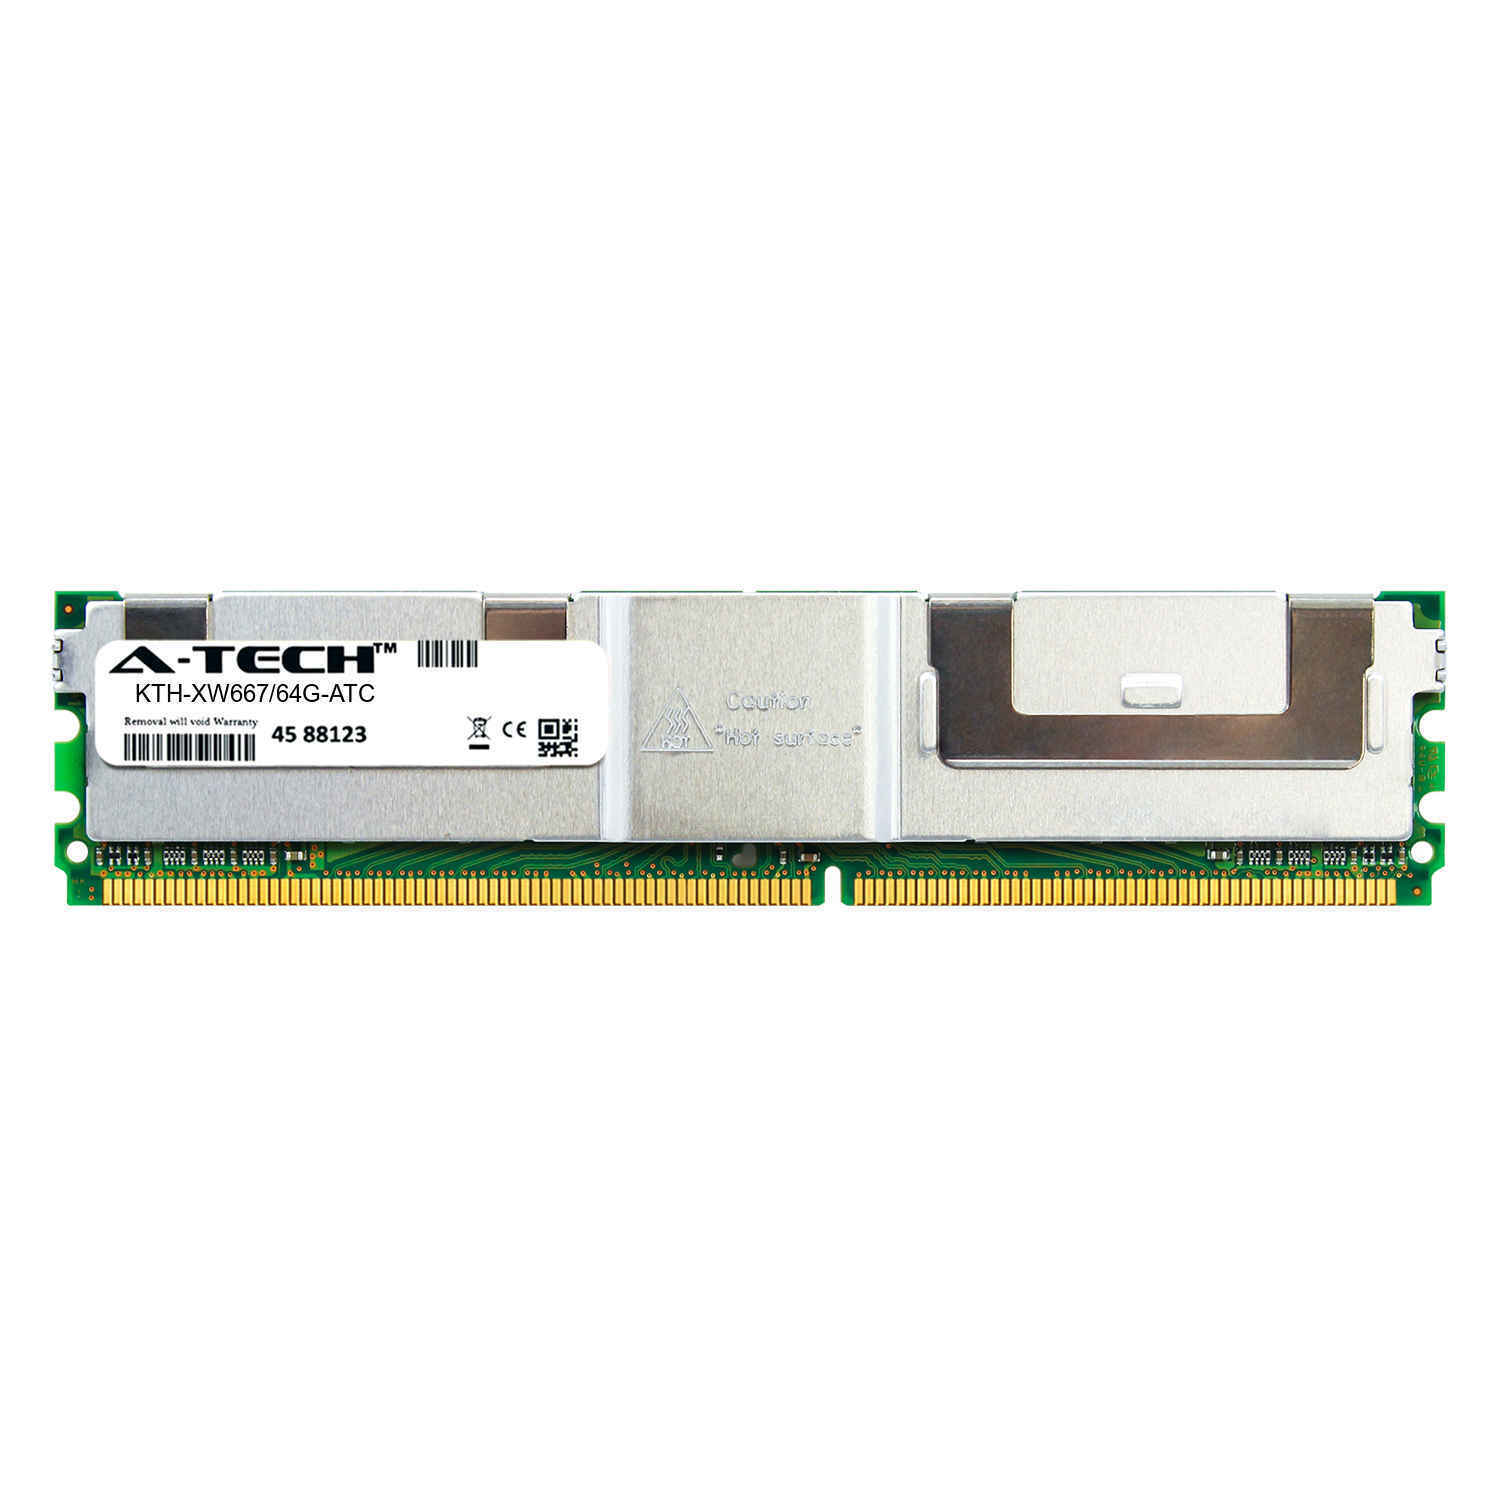 8GB DDR2 PC2-5300F FBDIMM (Kingston KTH-XW667/64G Equivalent) Server Memory RAM